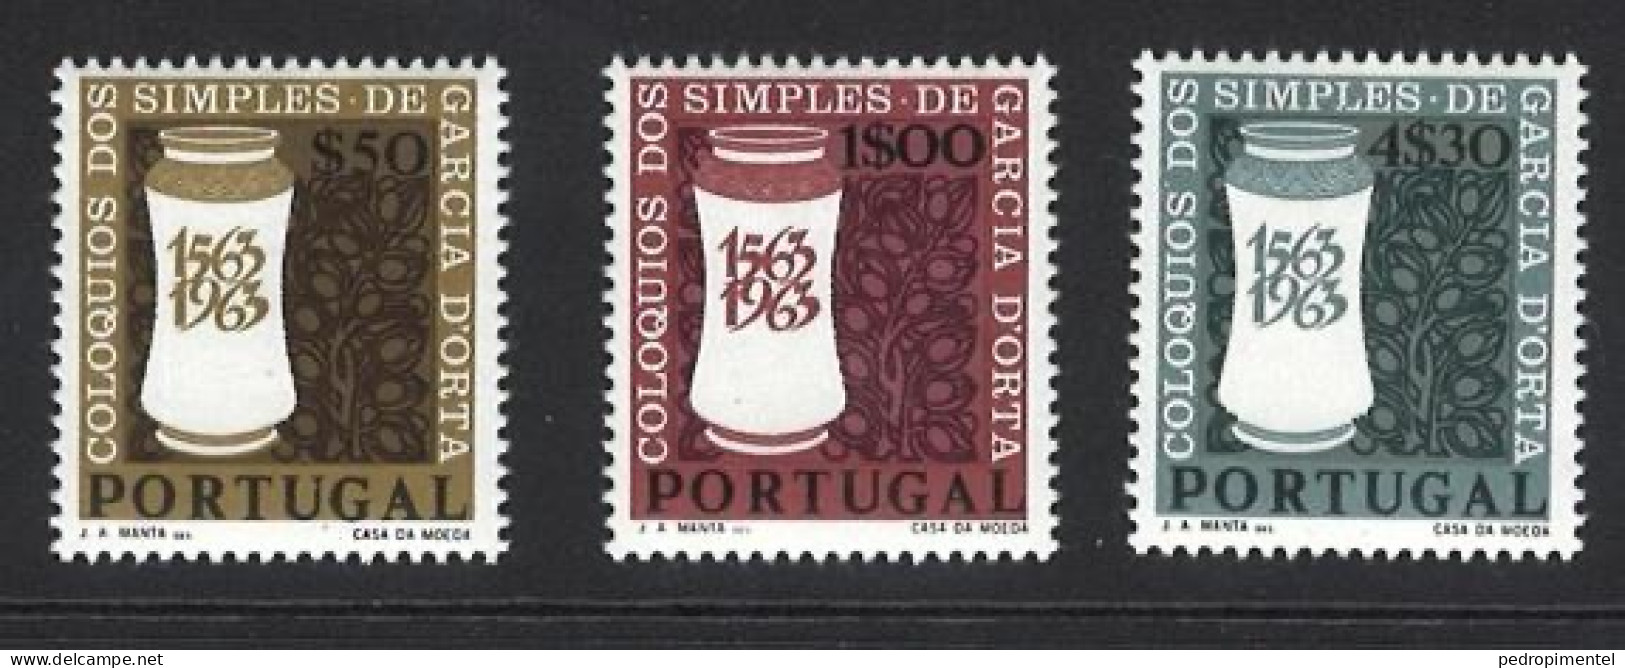 Portugal Stamps 1964 "Garcia Da Horta" Condition MNH OG #925-927 - Ongebruikt